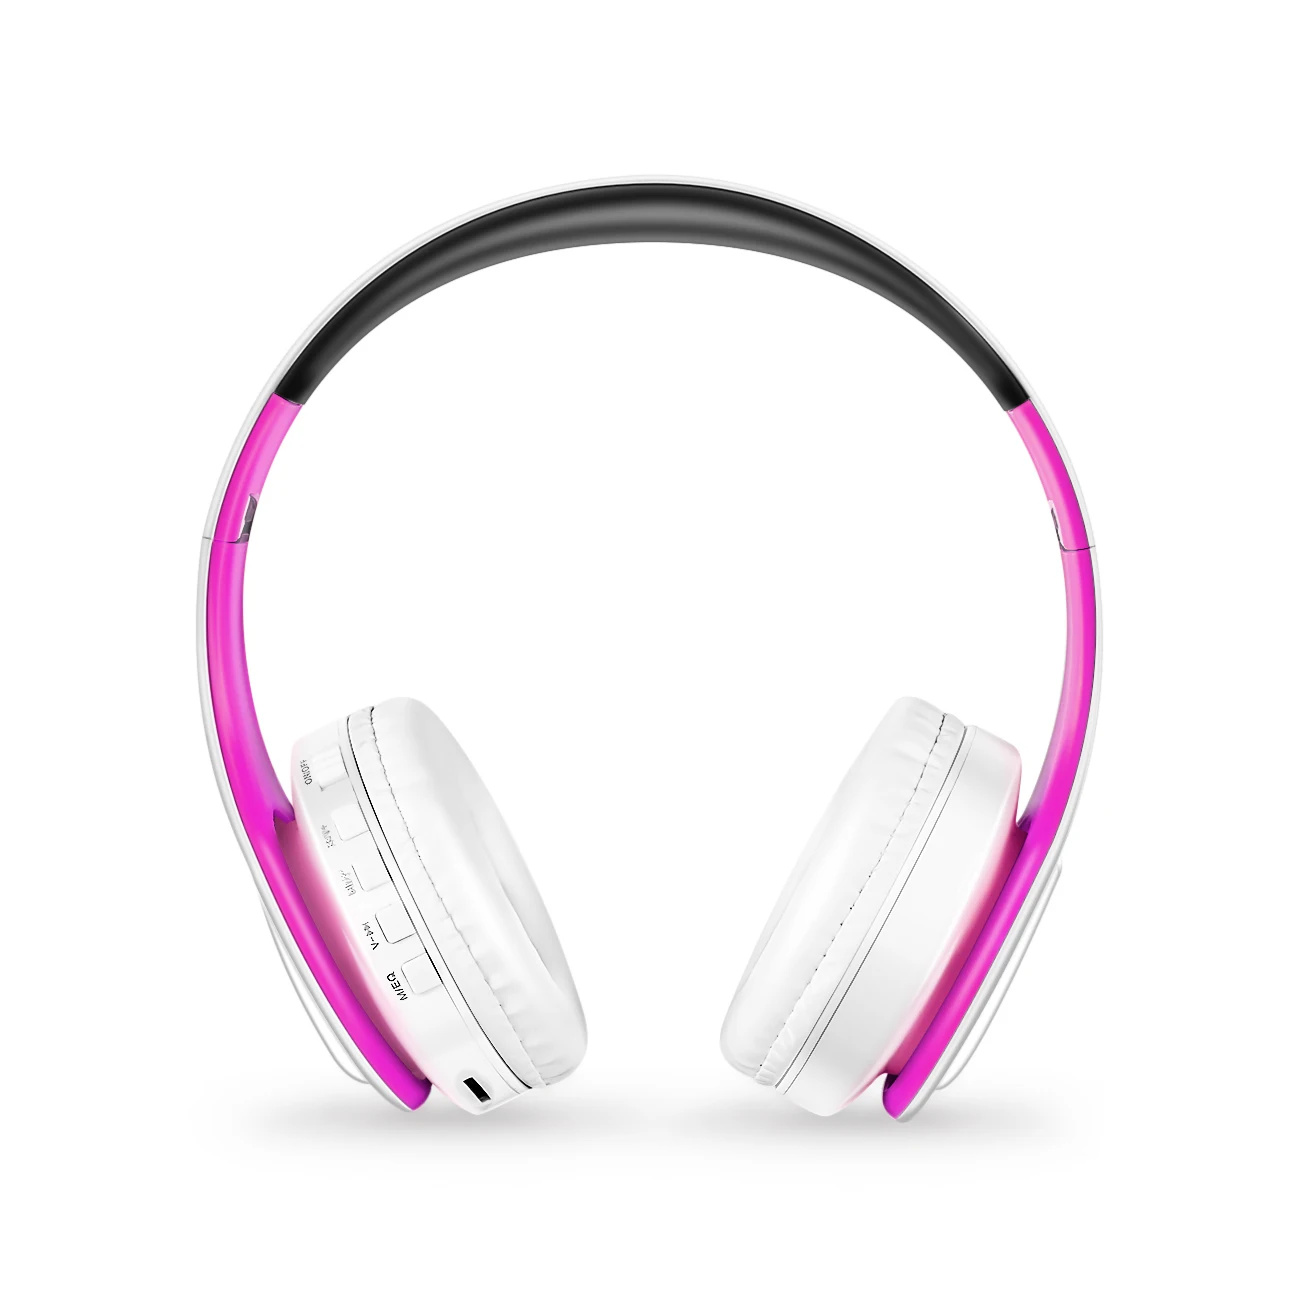 FOR Headphones Bluetooth Headset Earphone Wireless Headphones Stereo Foldable Sport Earphone Microphone Headset Handfree MP3 enlarge